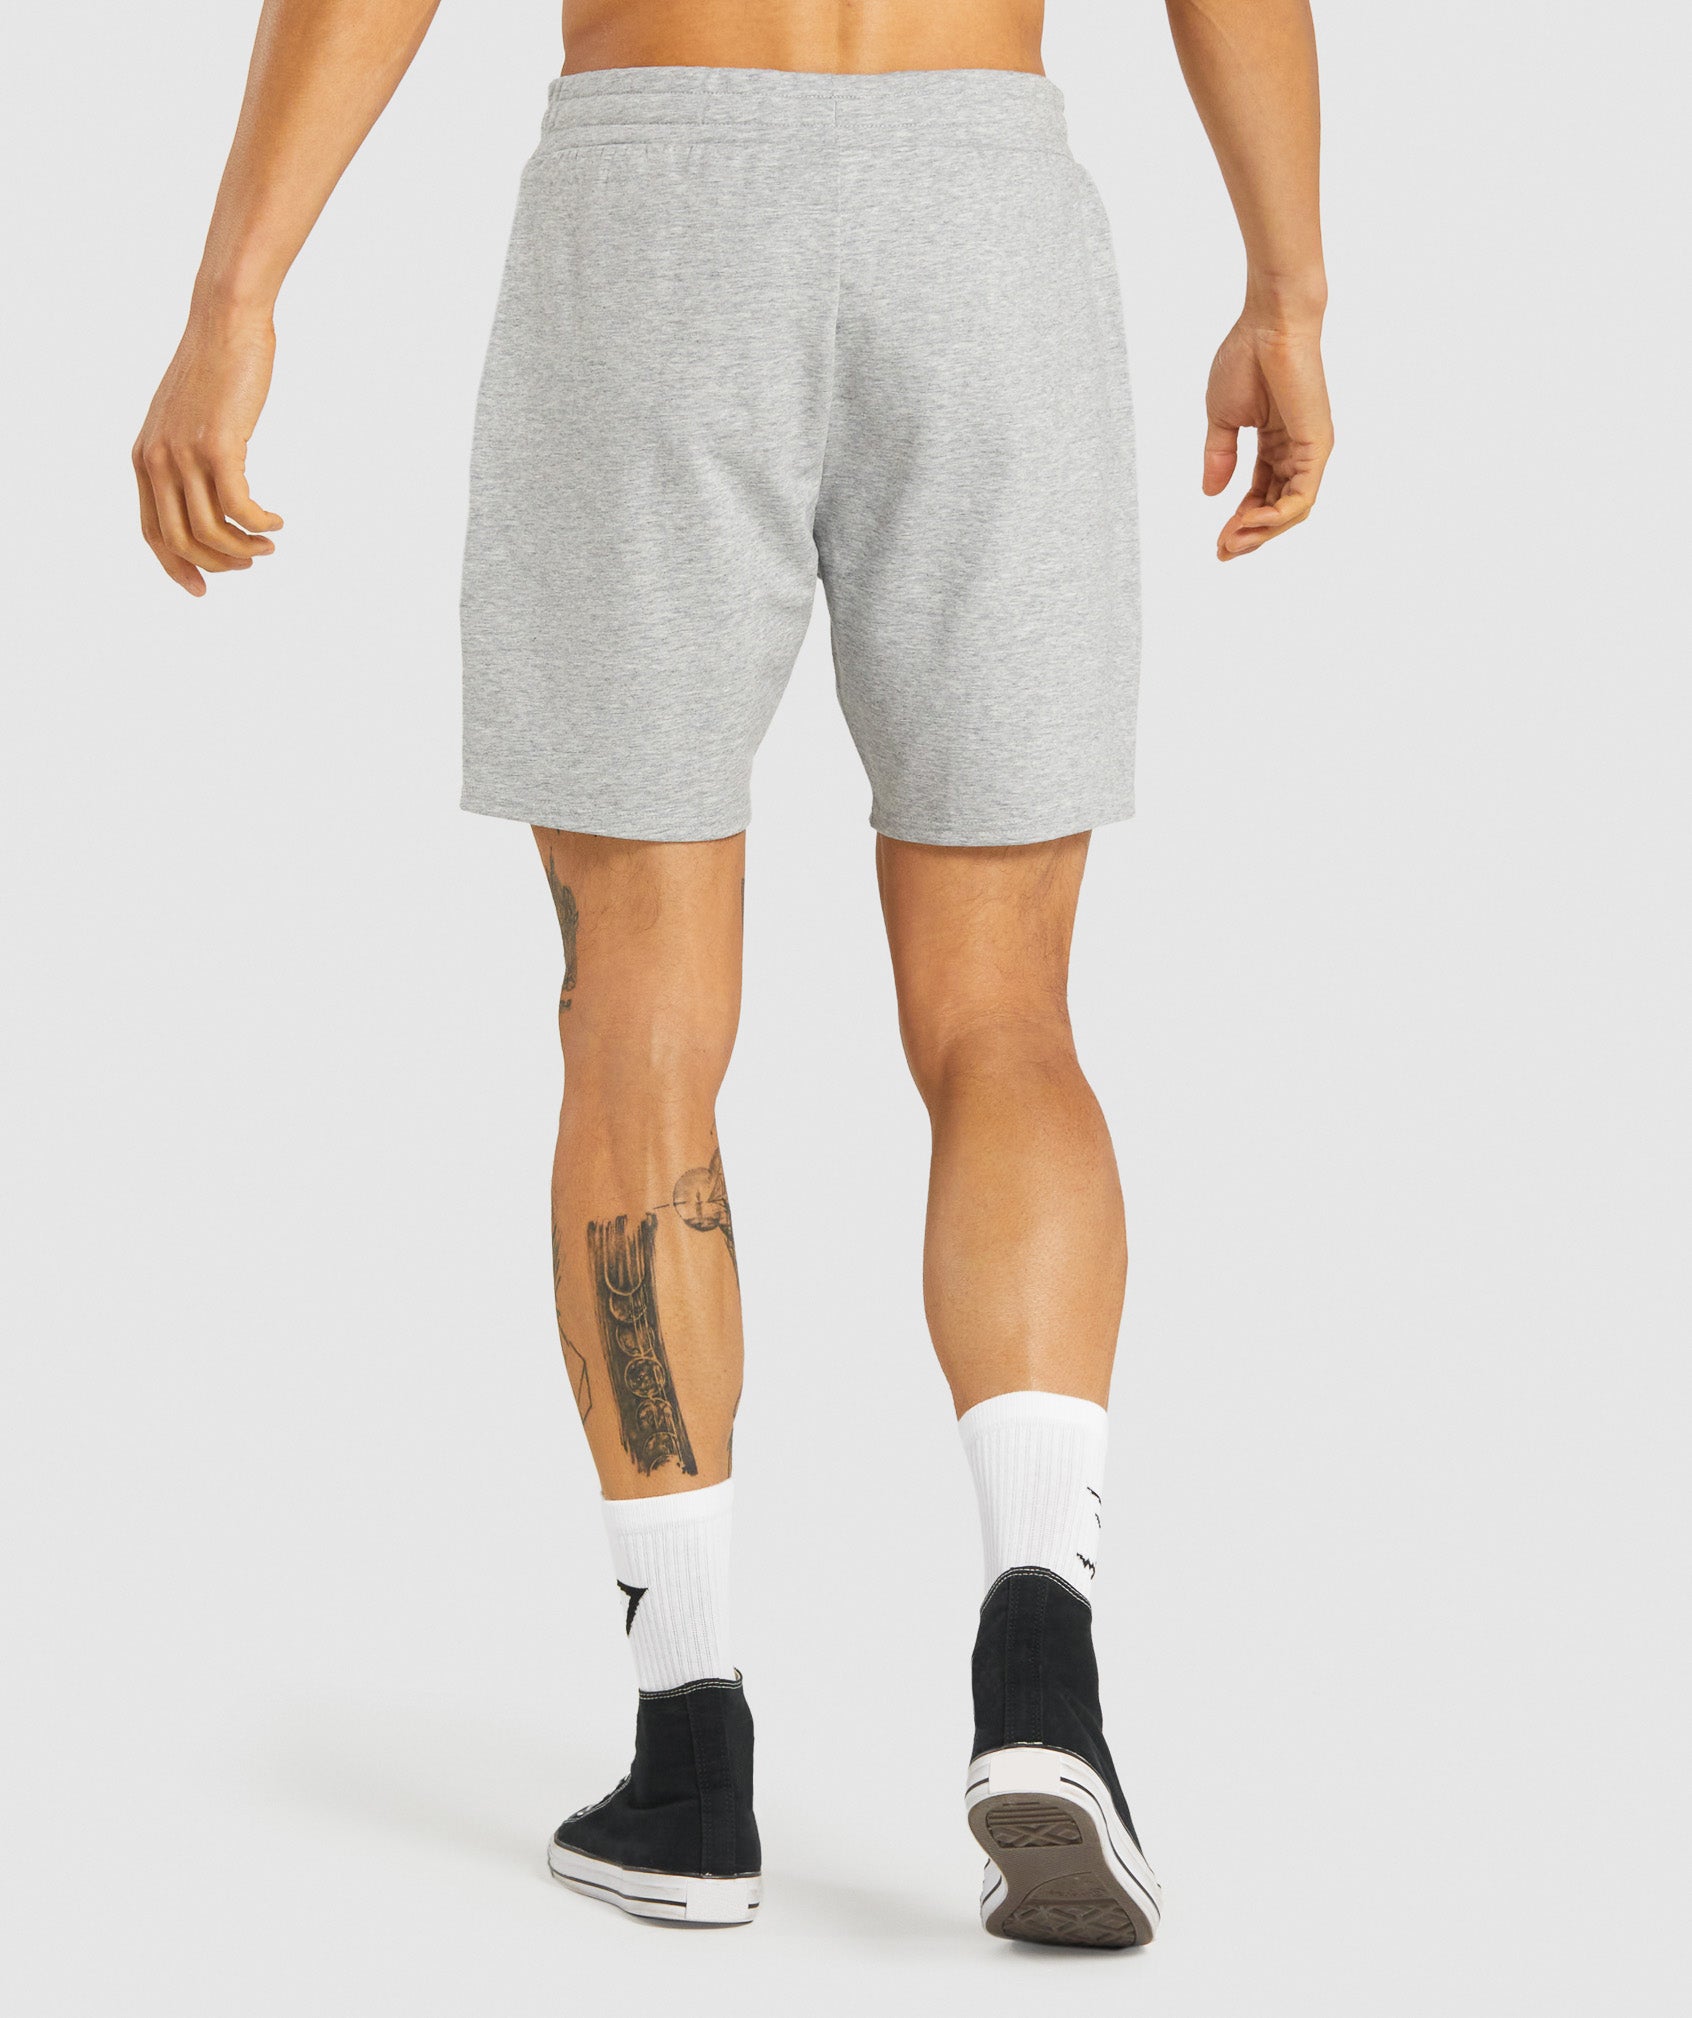 Essential 7” Shorts